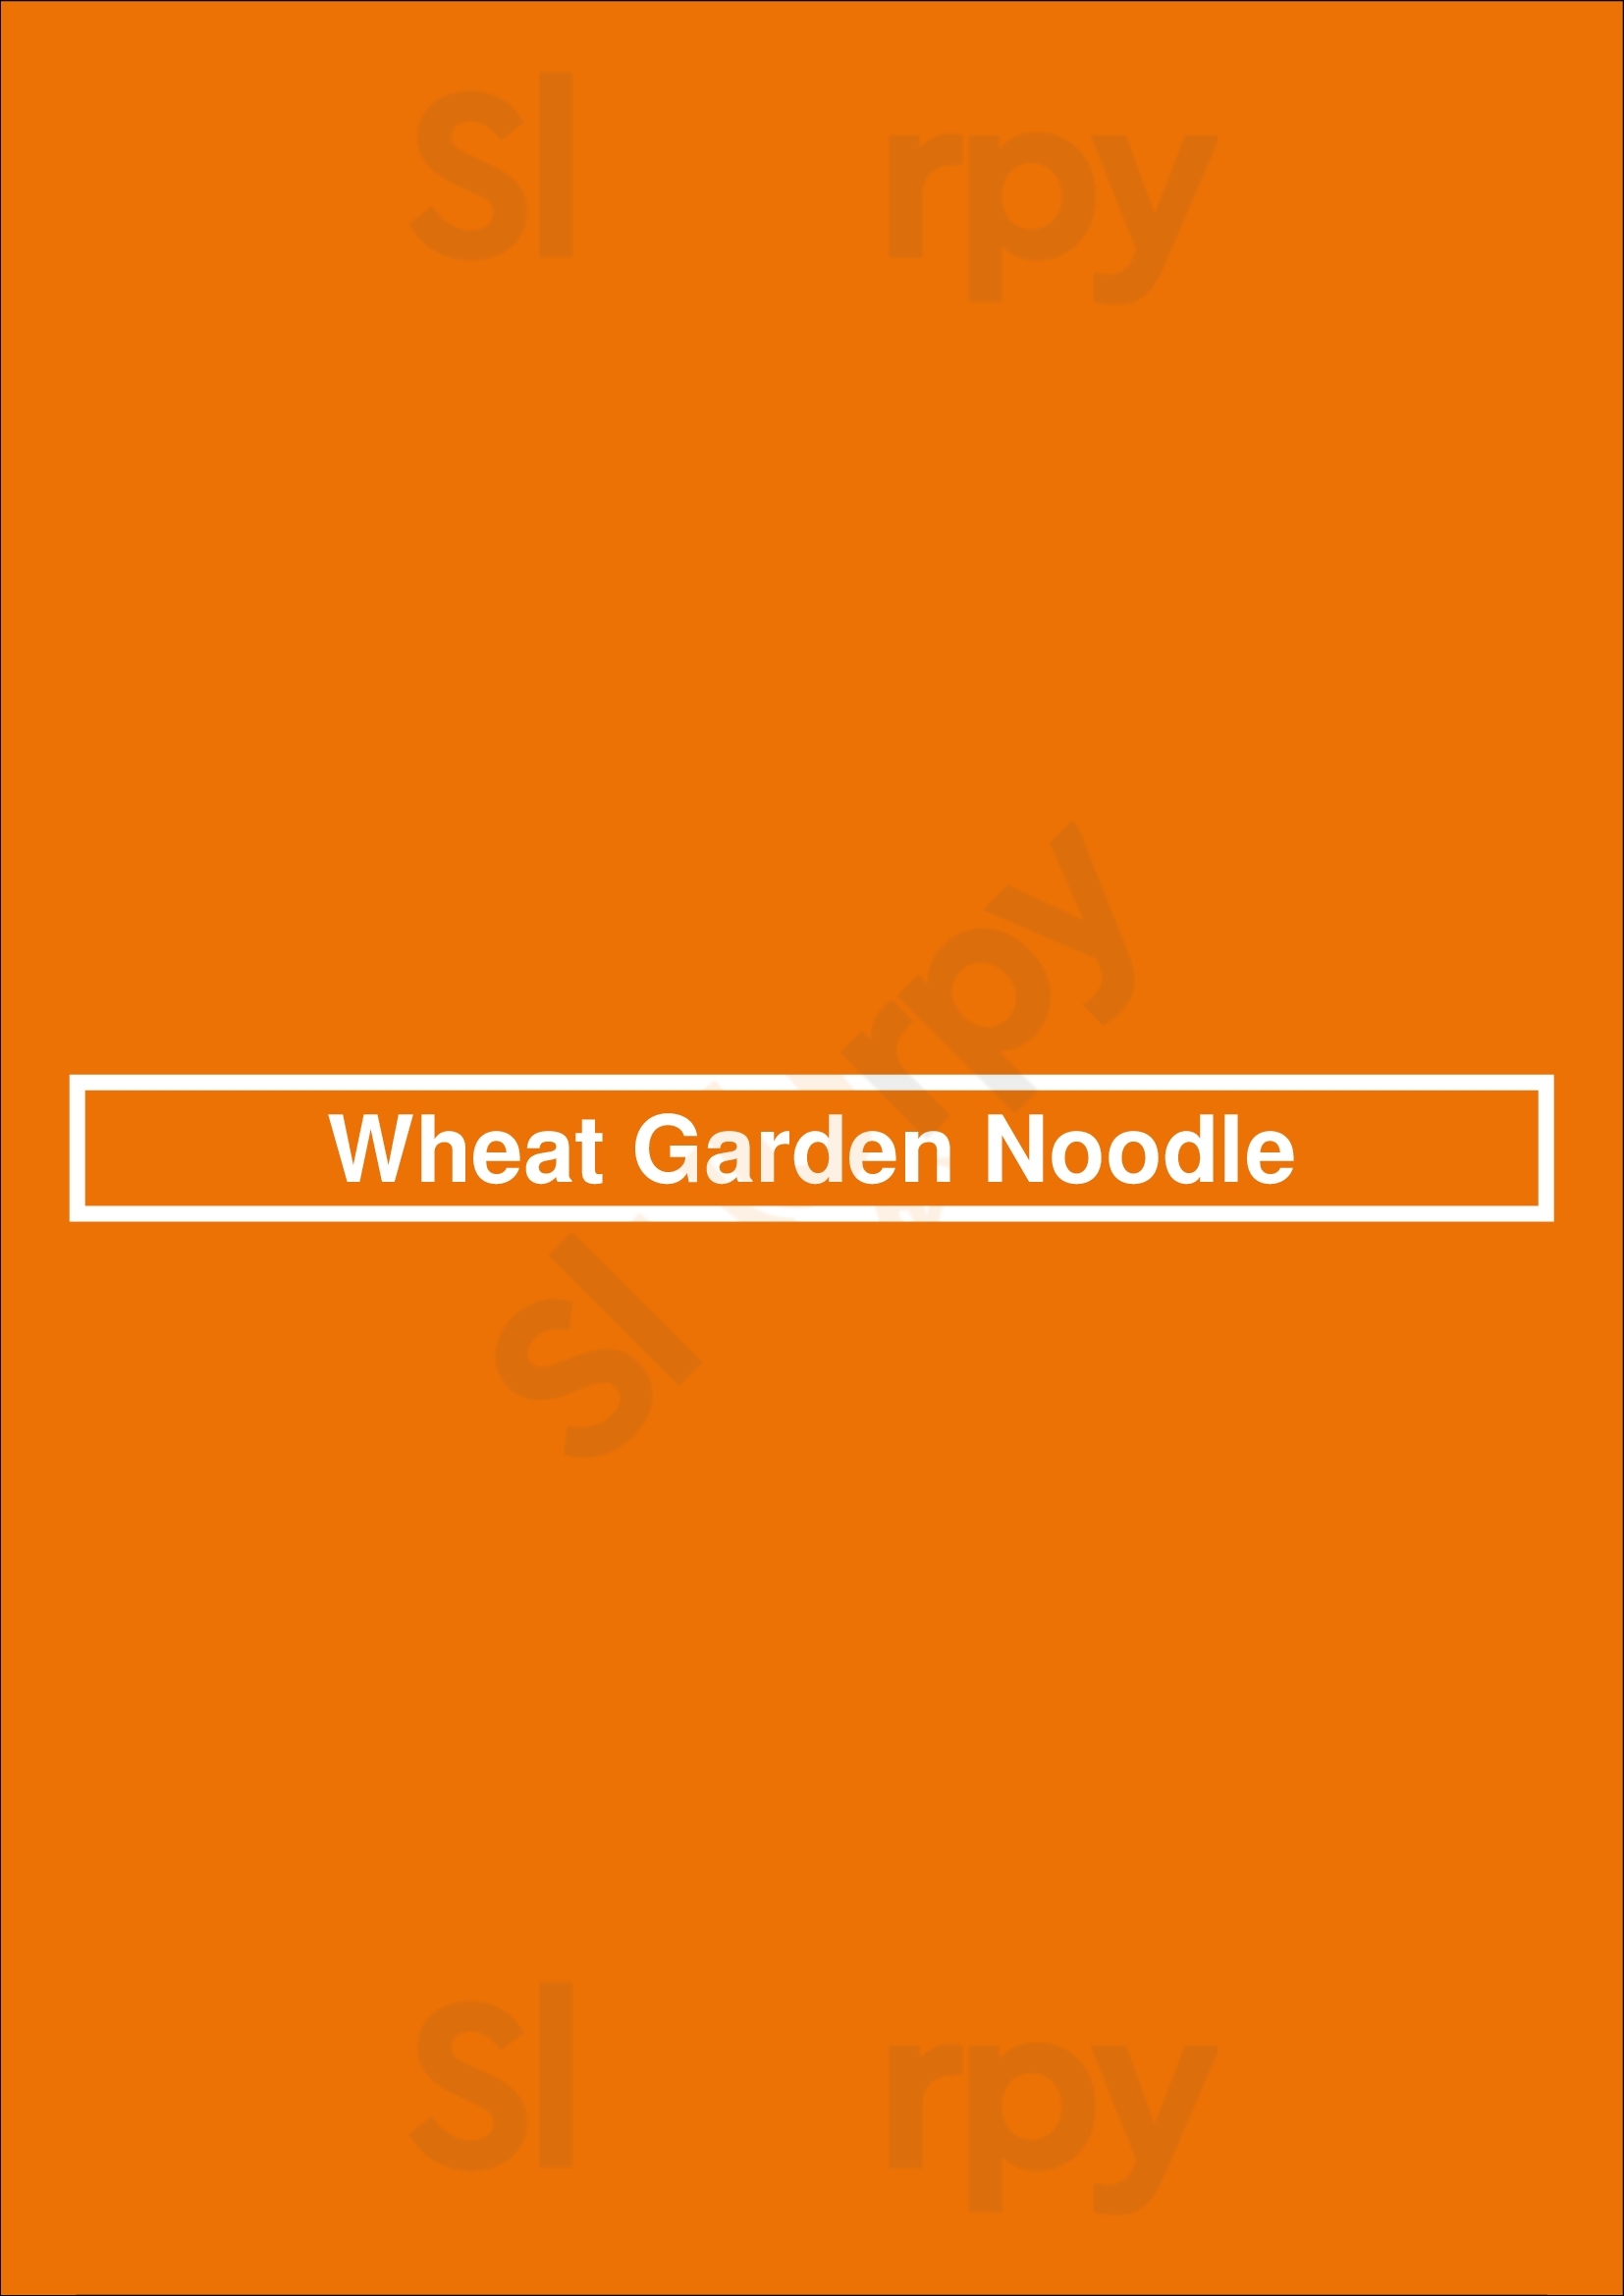 Wheat Garden Noodle Edmonton Menu - 1